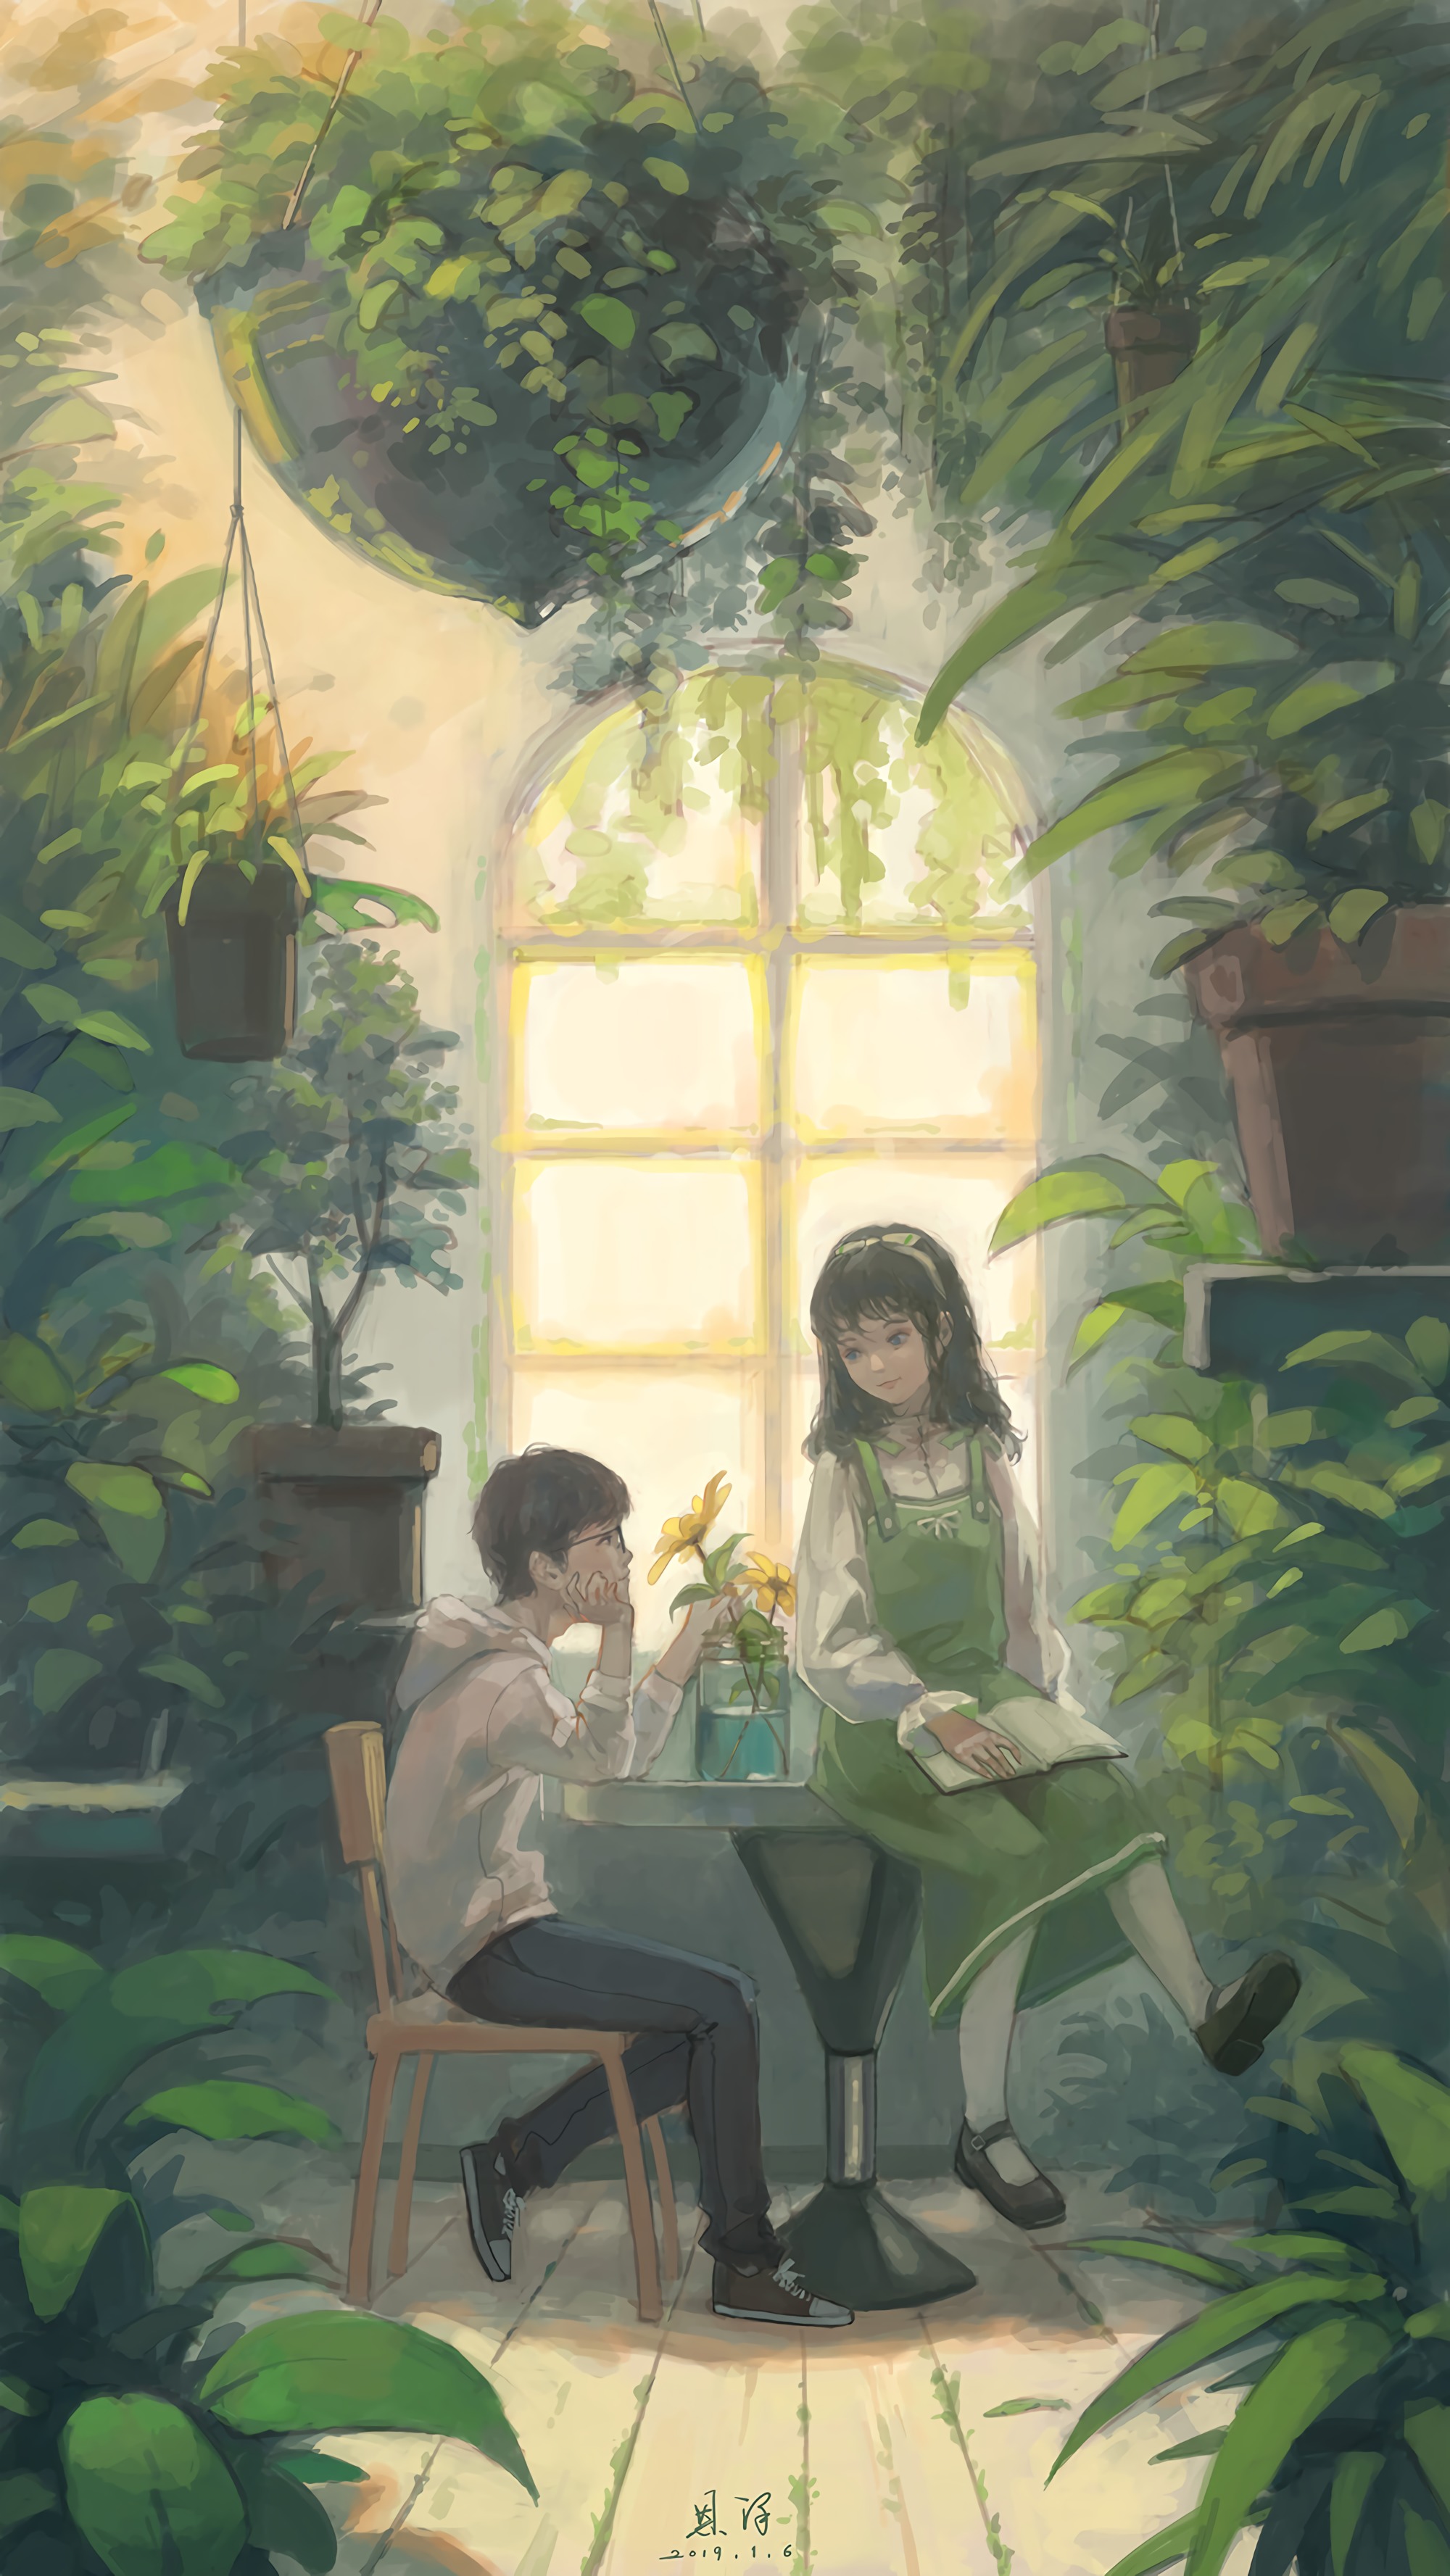 flowers, girl, guy, art, window, greenhouse